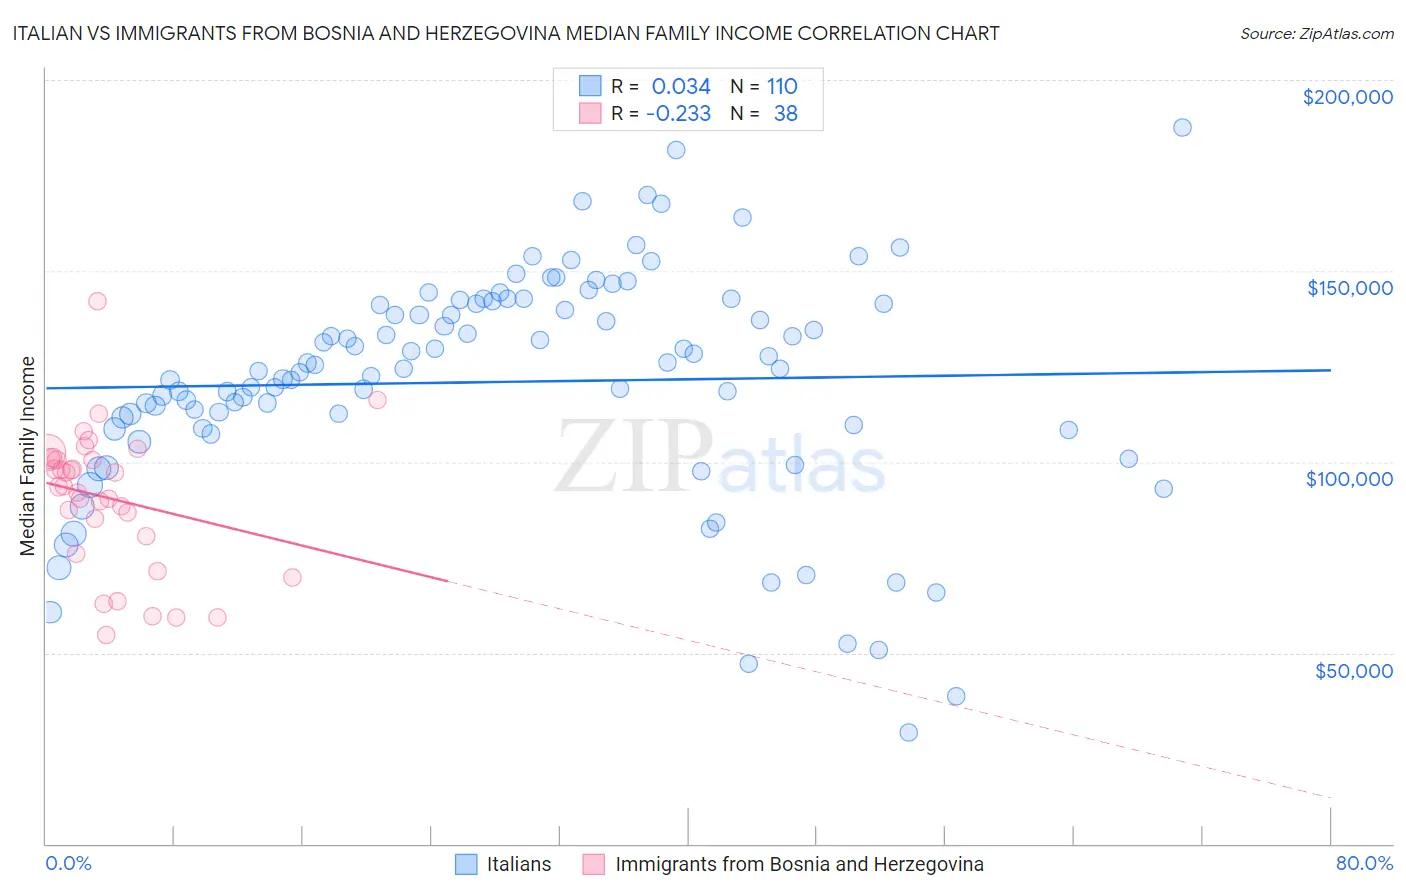 Italian vs Immigrants from Bosnia and Herzegovina Median Family Income